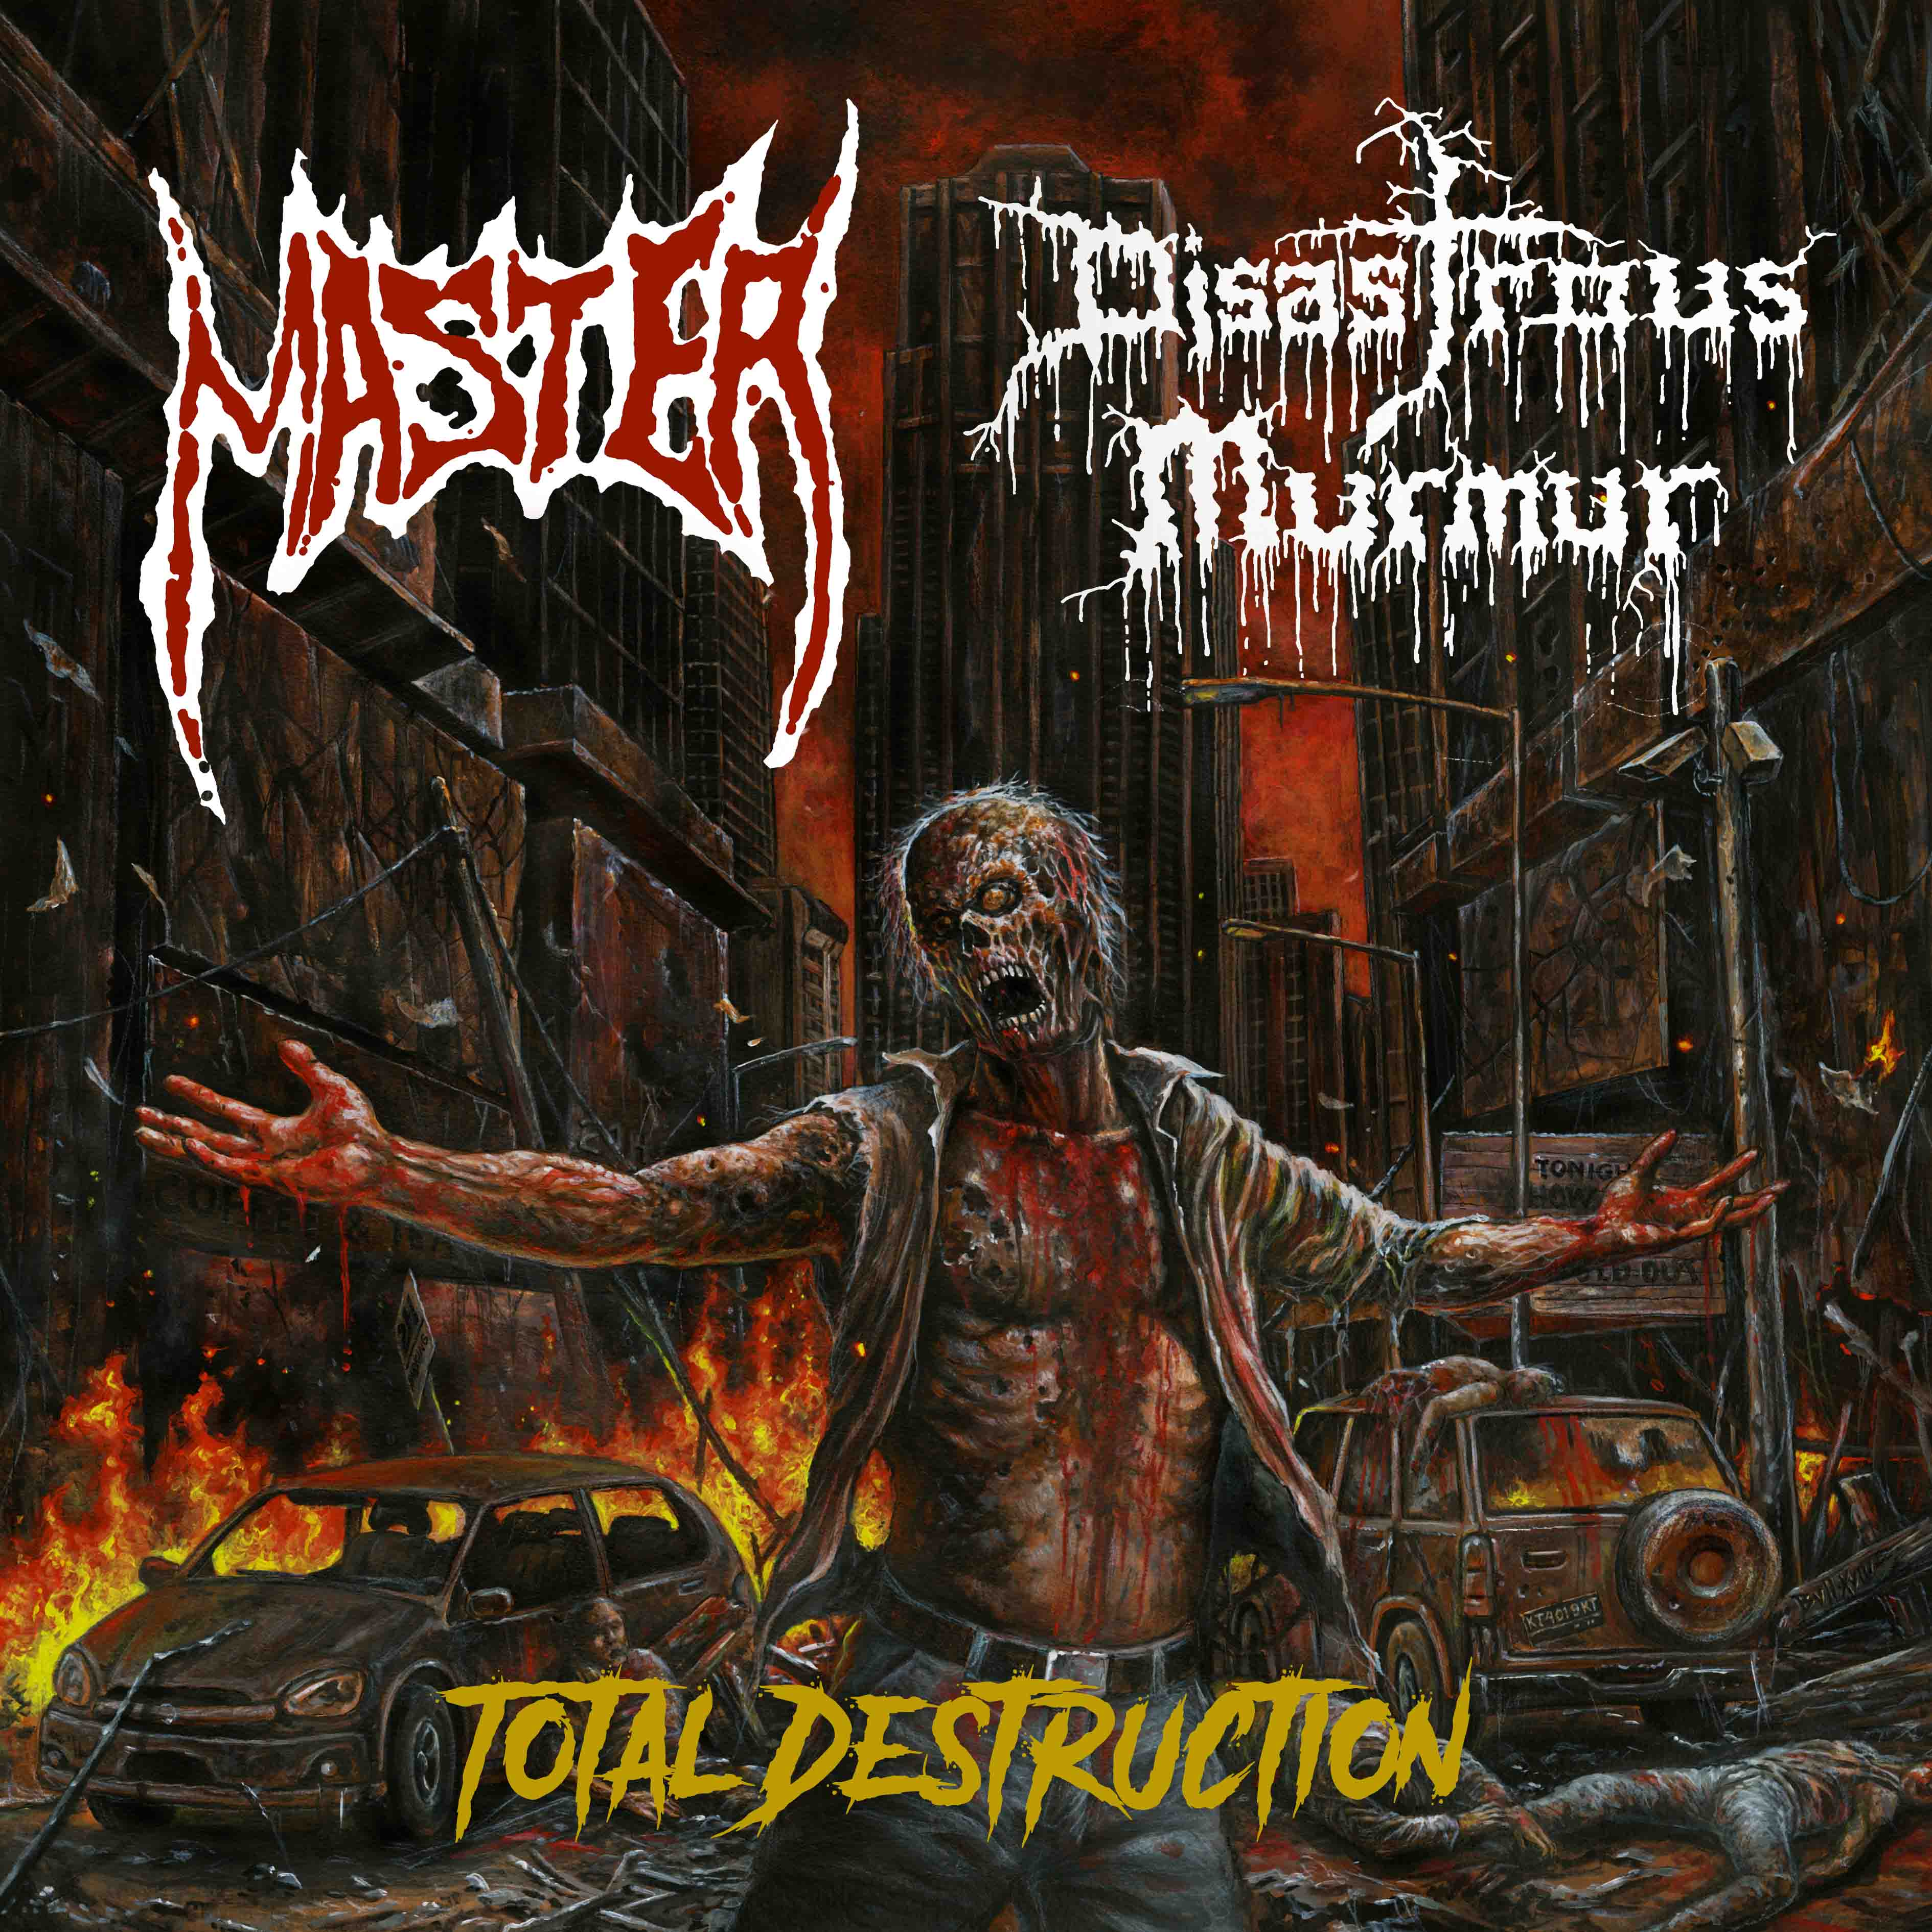 (Vinyl) - Murmur/Master Destruction Total - Disastrous